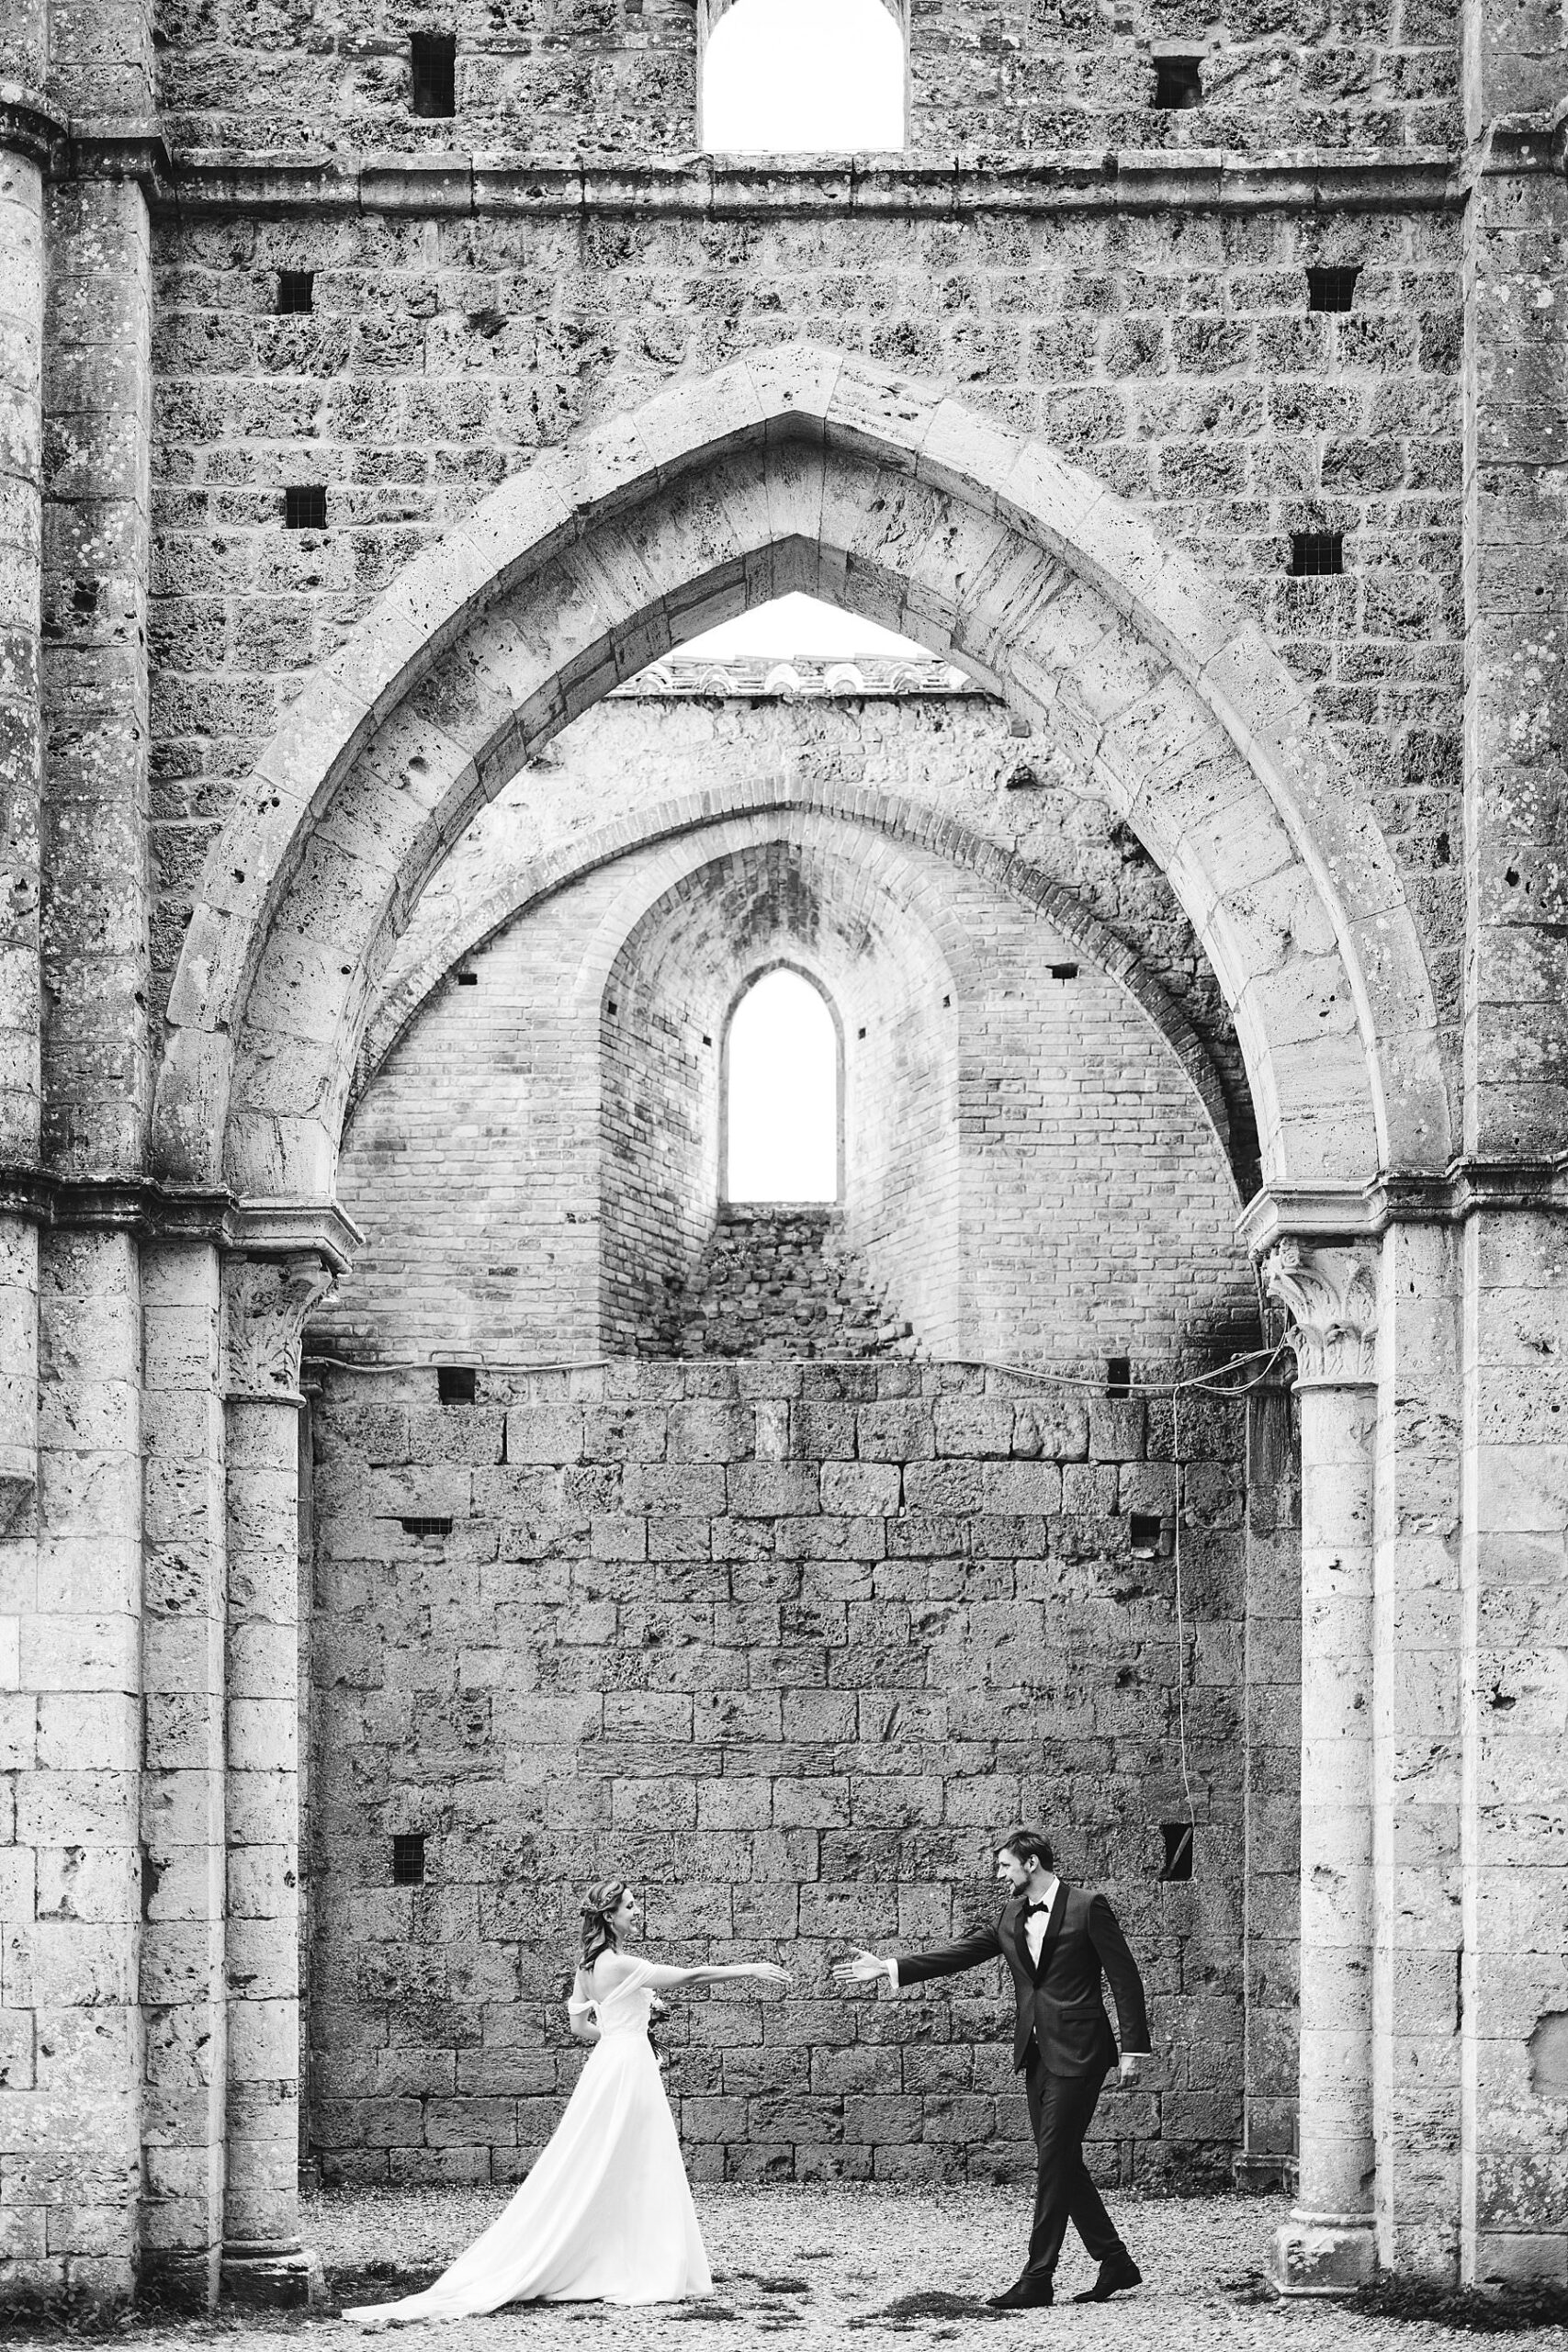 Exciting and elegant couple portrait wedding photo session inside the San Galgano Abbey